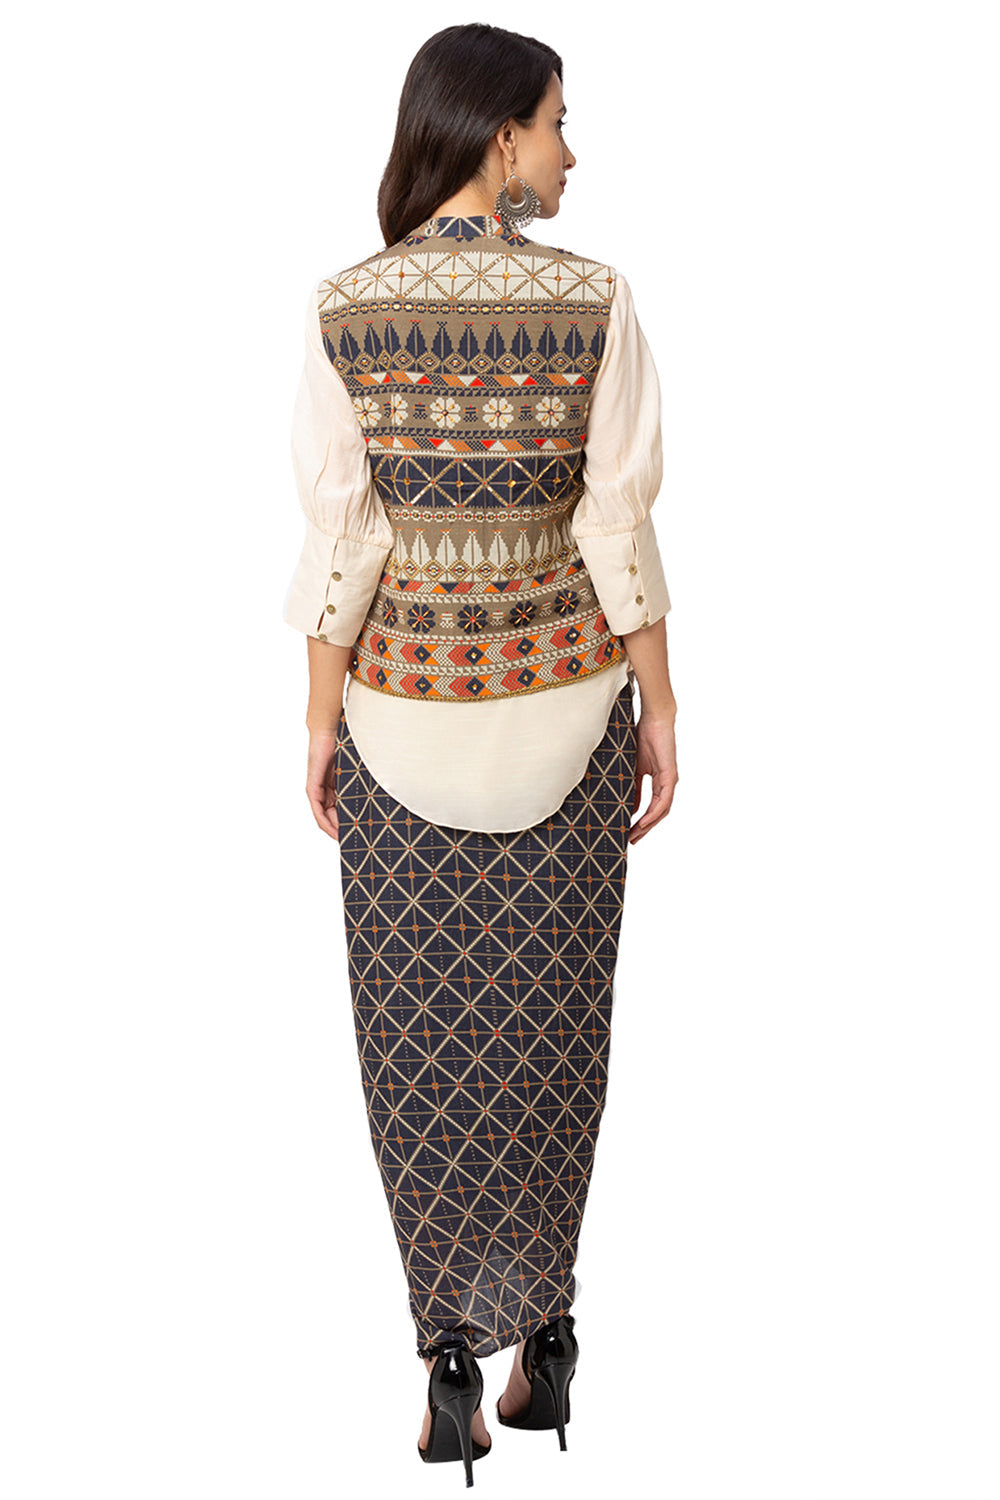 Tiraz Printed Embroidered Drape Skirt Set